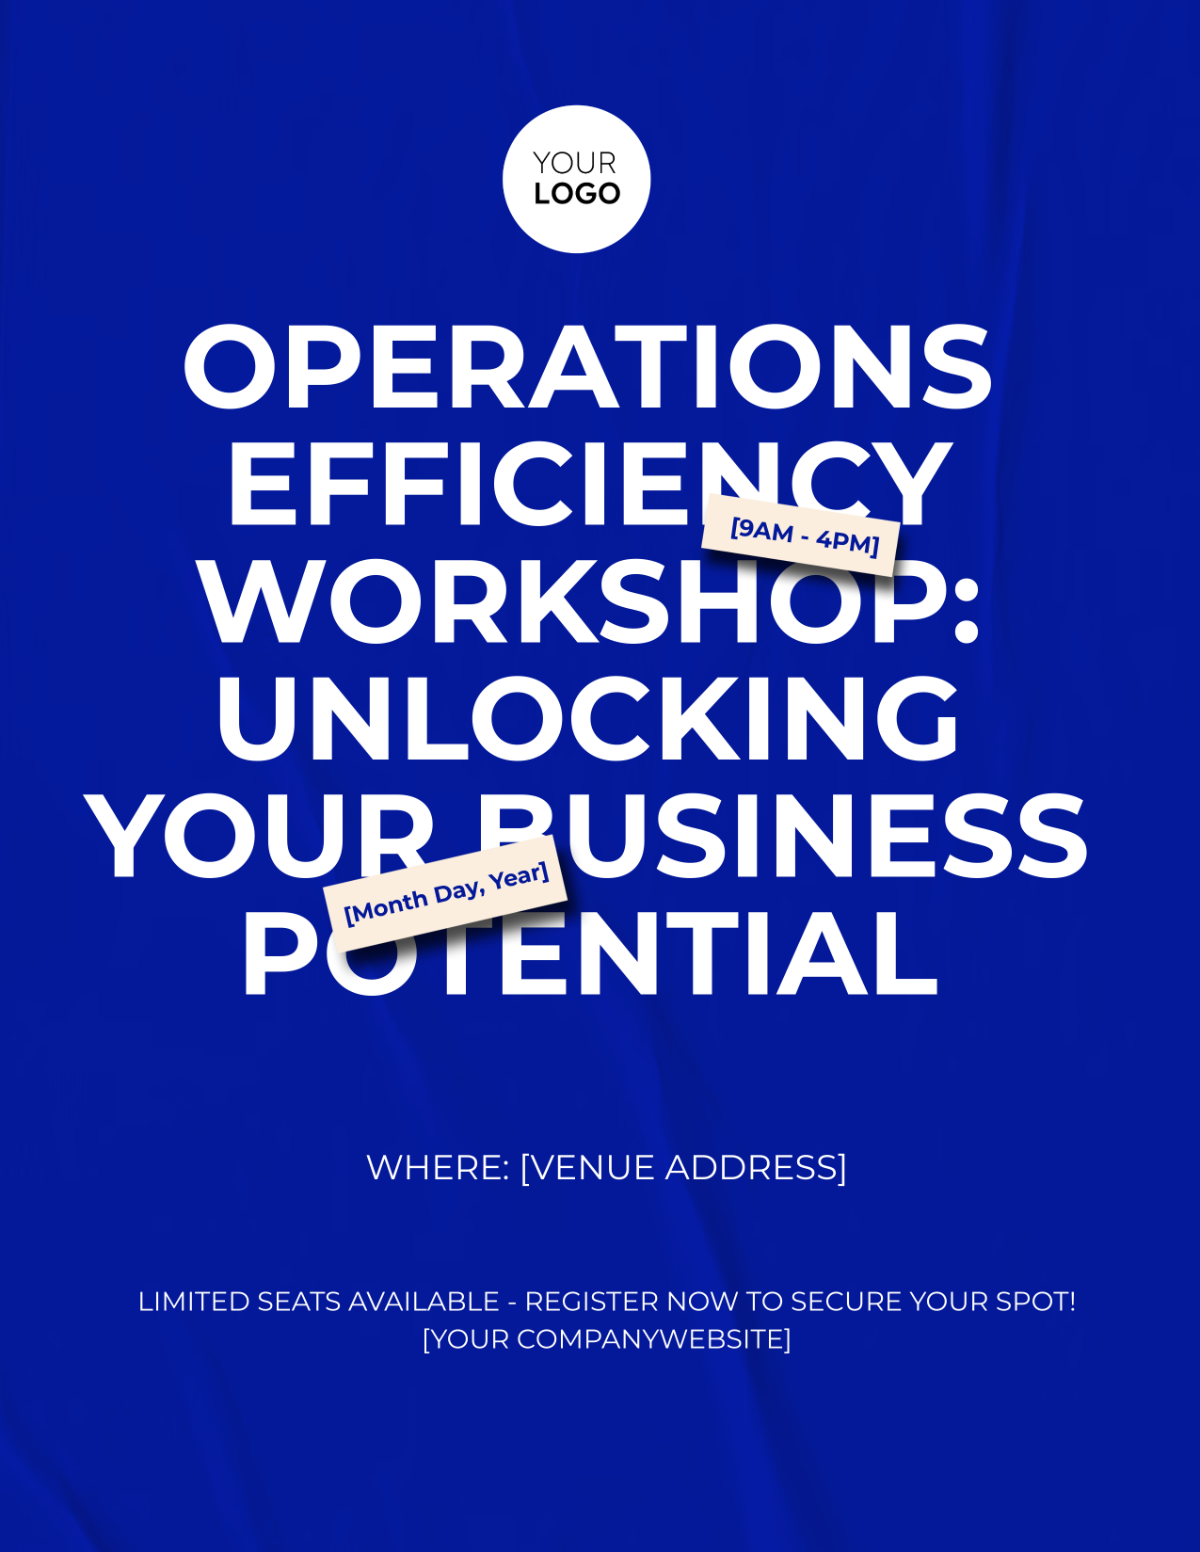 Operations Efficiency Workshop Flyer Template